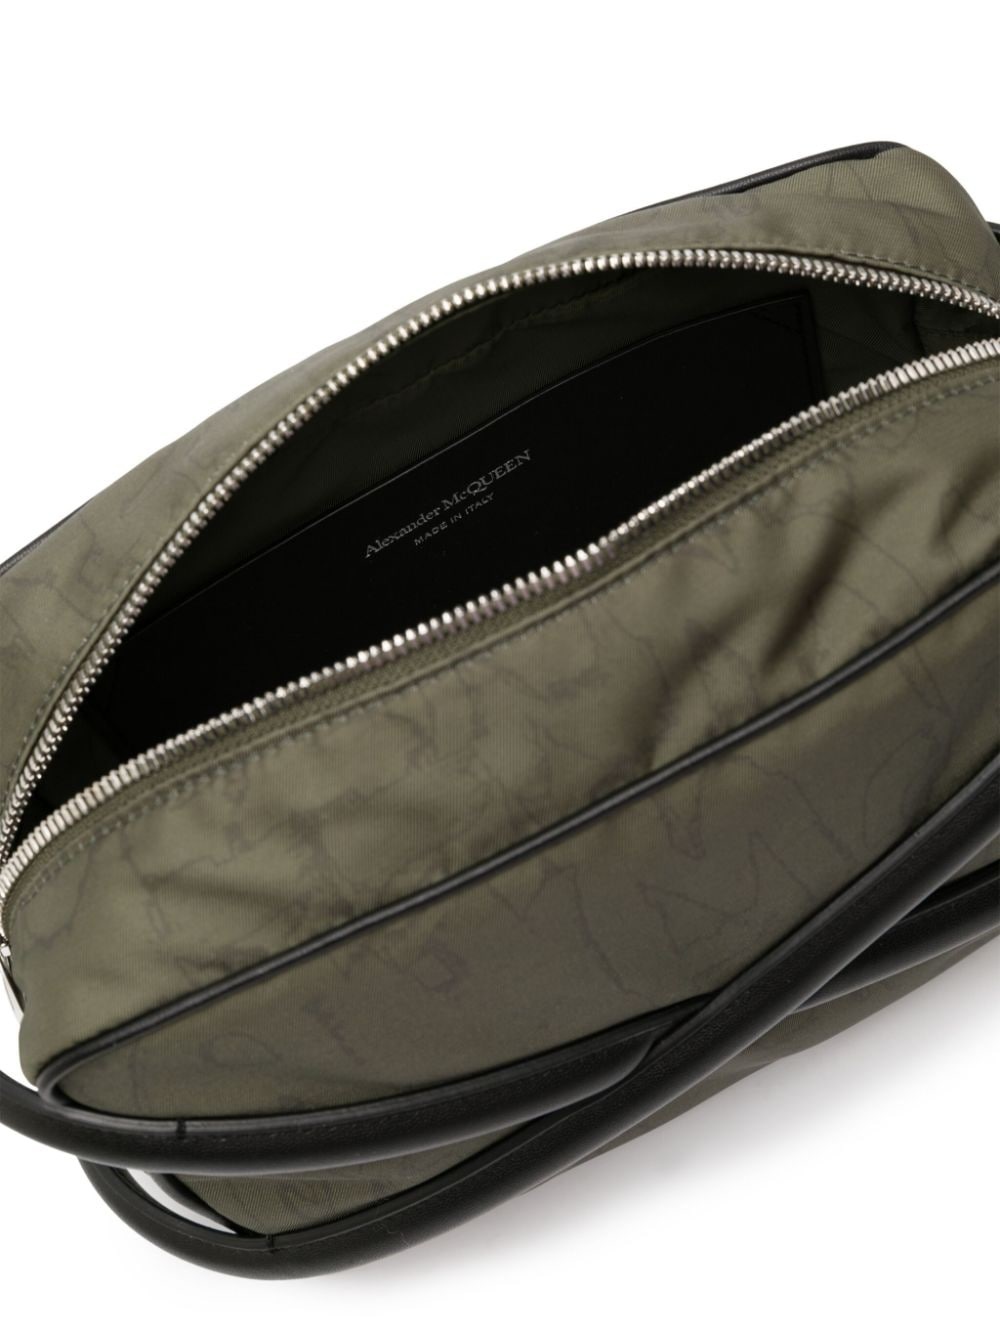 panelled-leather gabardine bag - 5